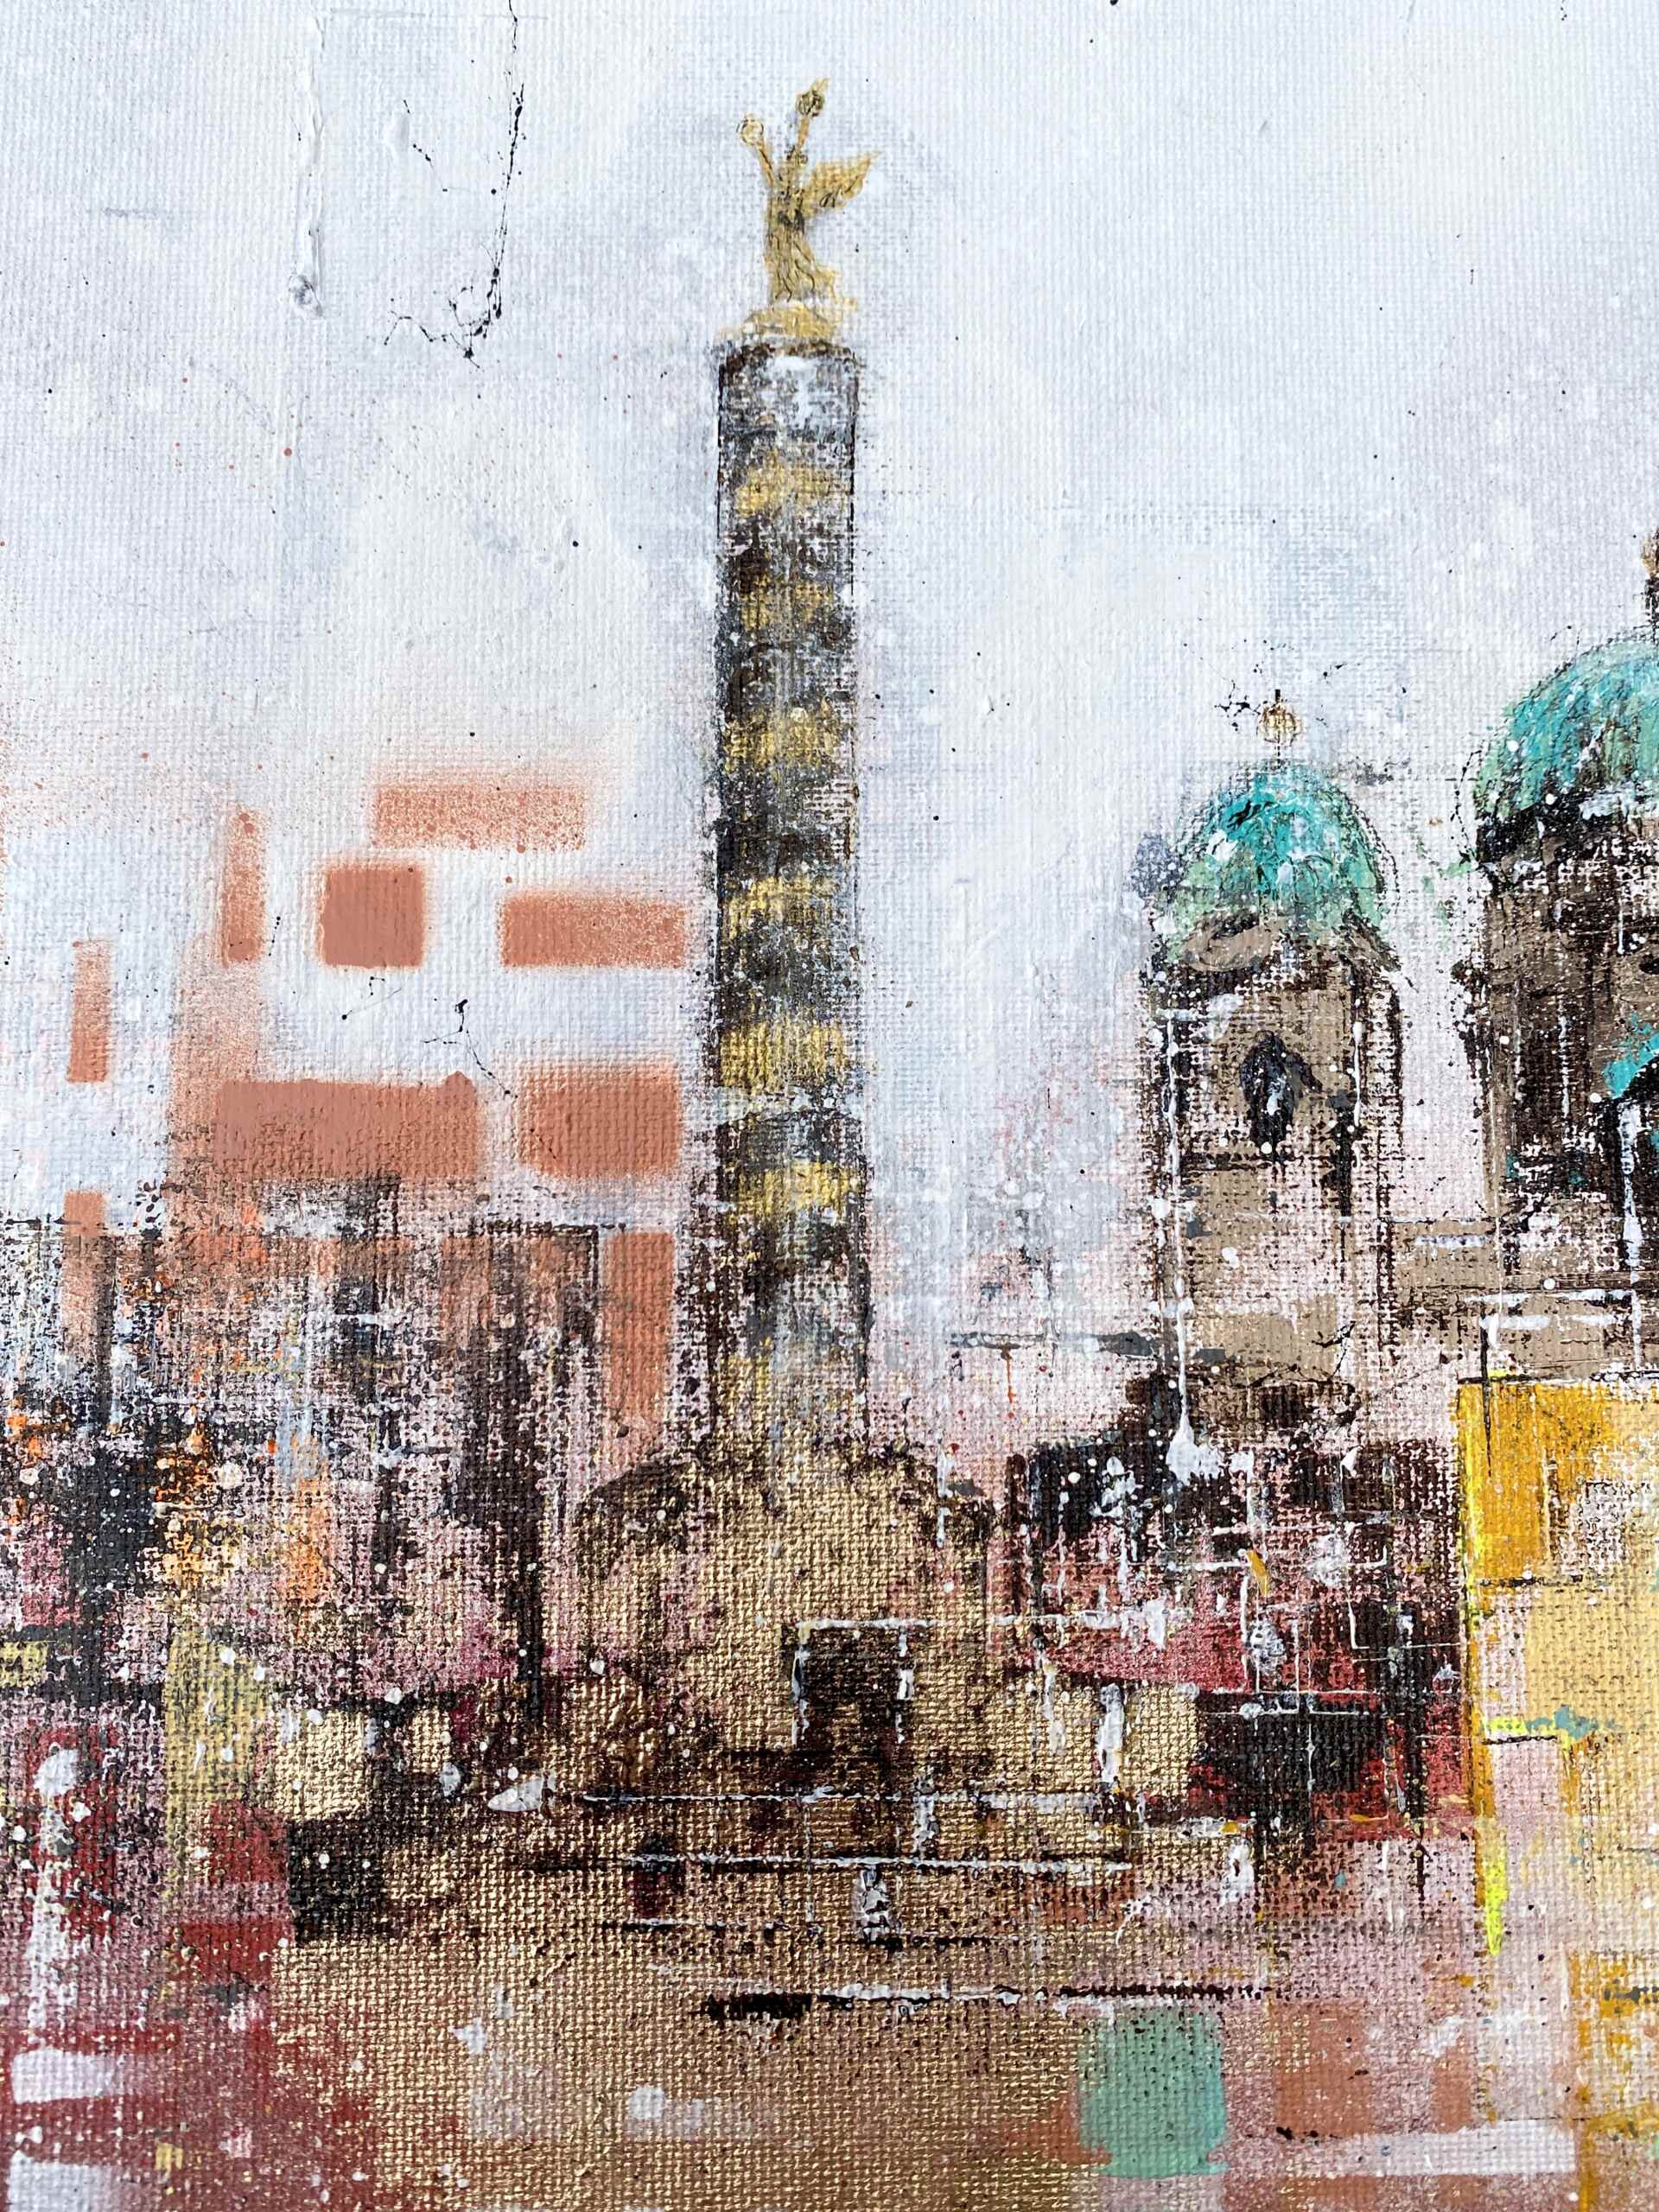 Detail of artwork "Berlin No 1" by Nina Groth